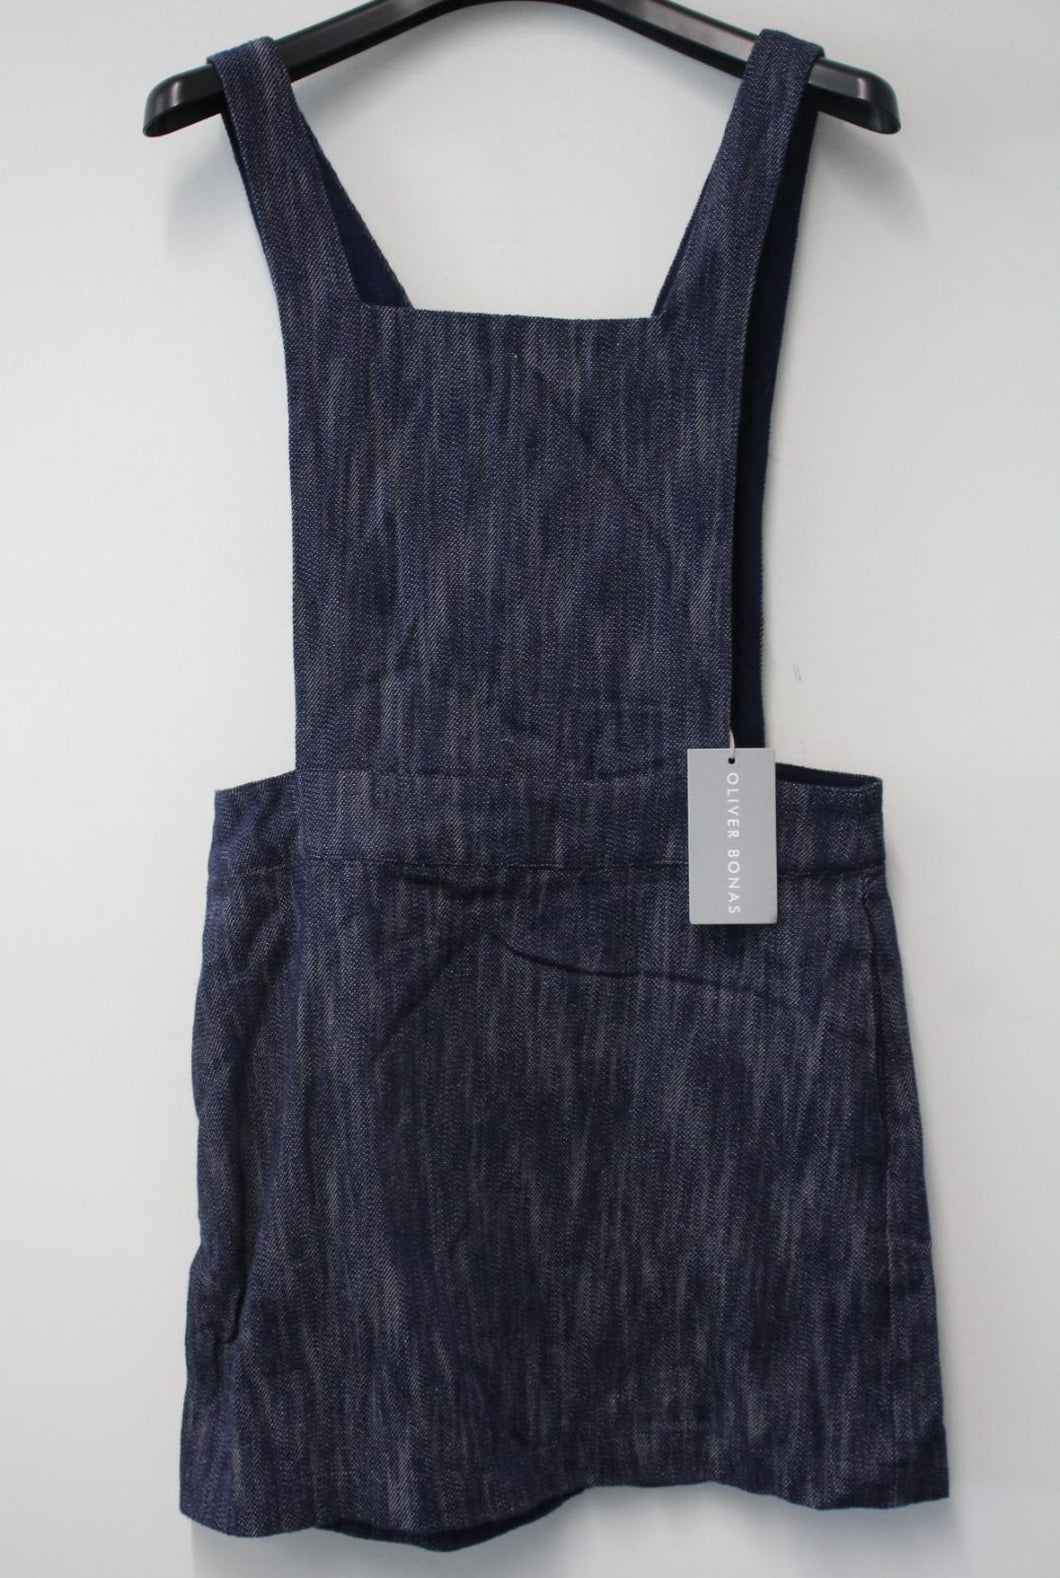 OLIVER BONAS Ladies Blue Cotton Denim Sleeveless Deena Pinafore Dress UK10 NEW